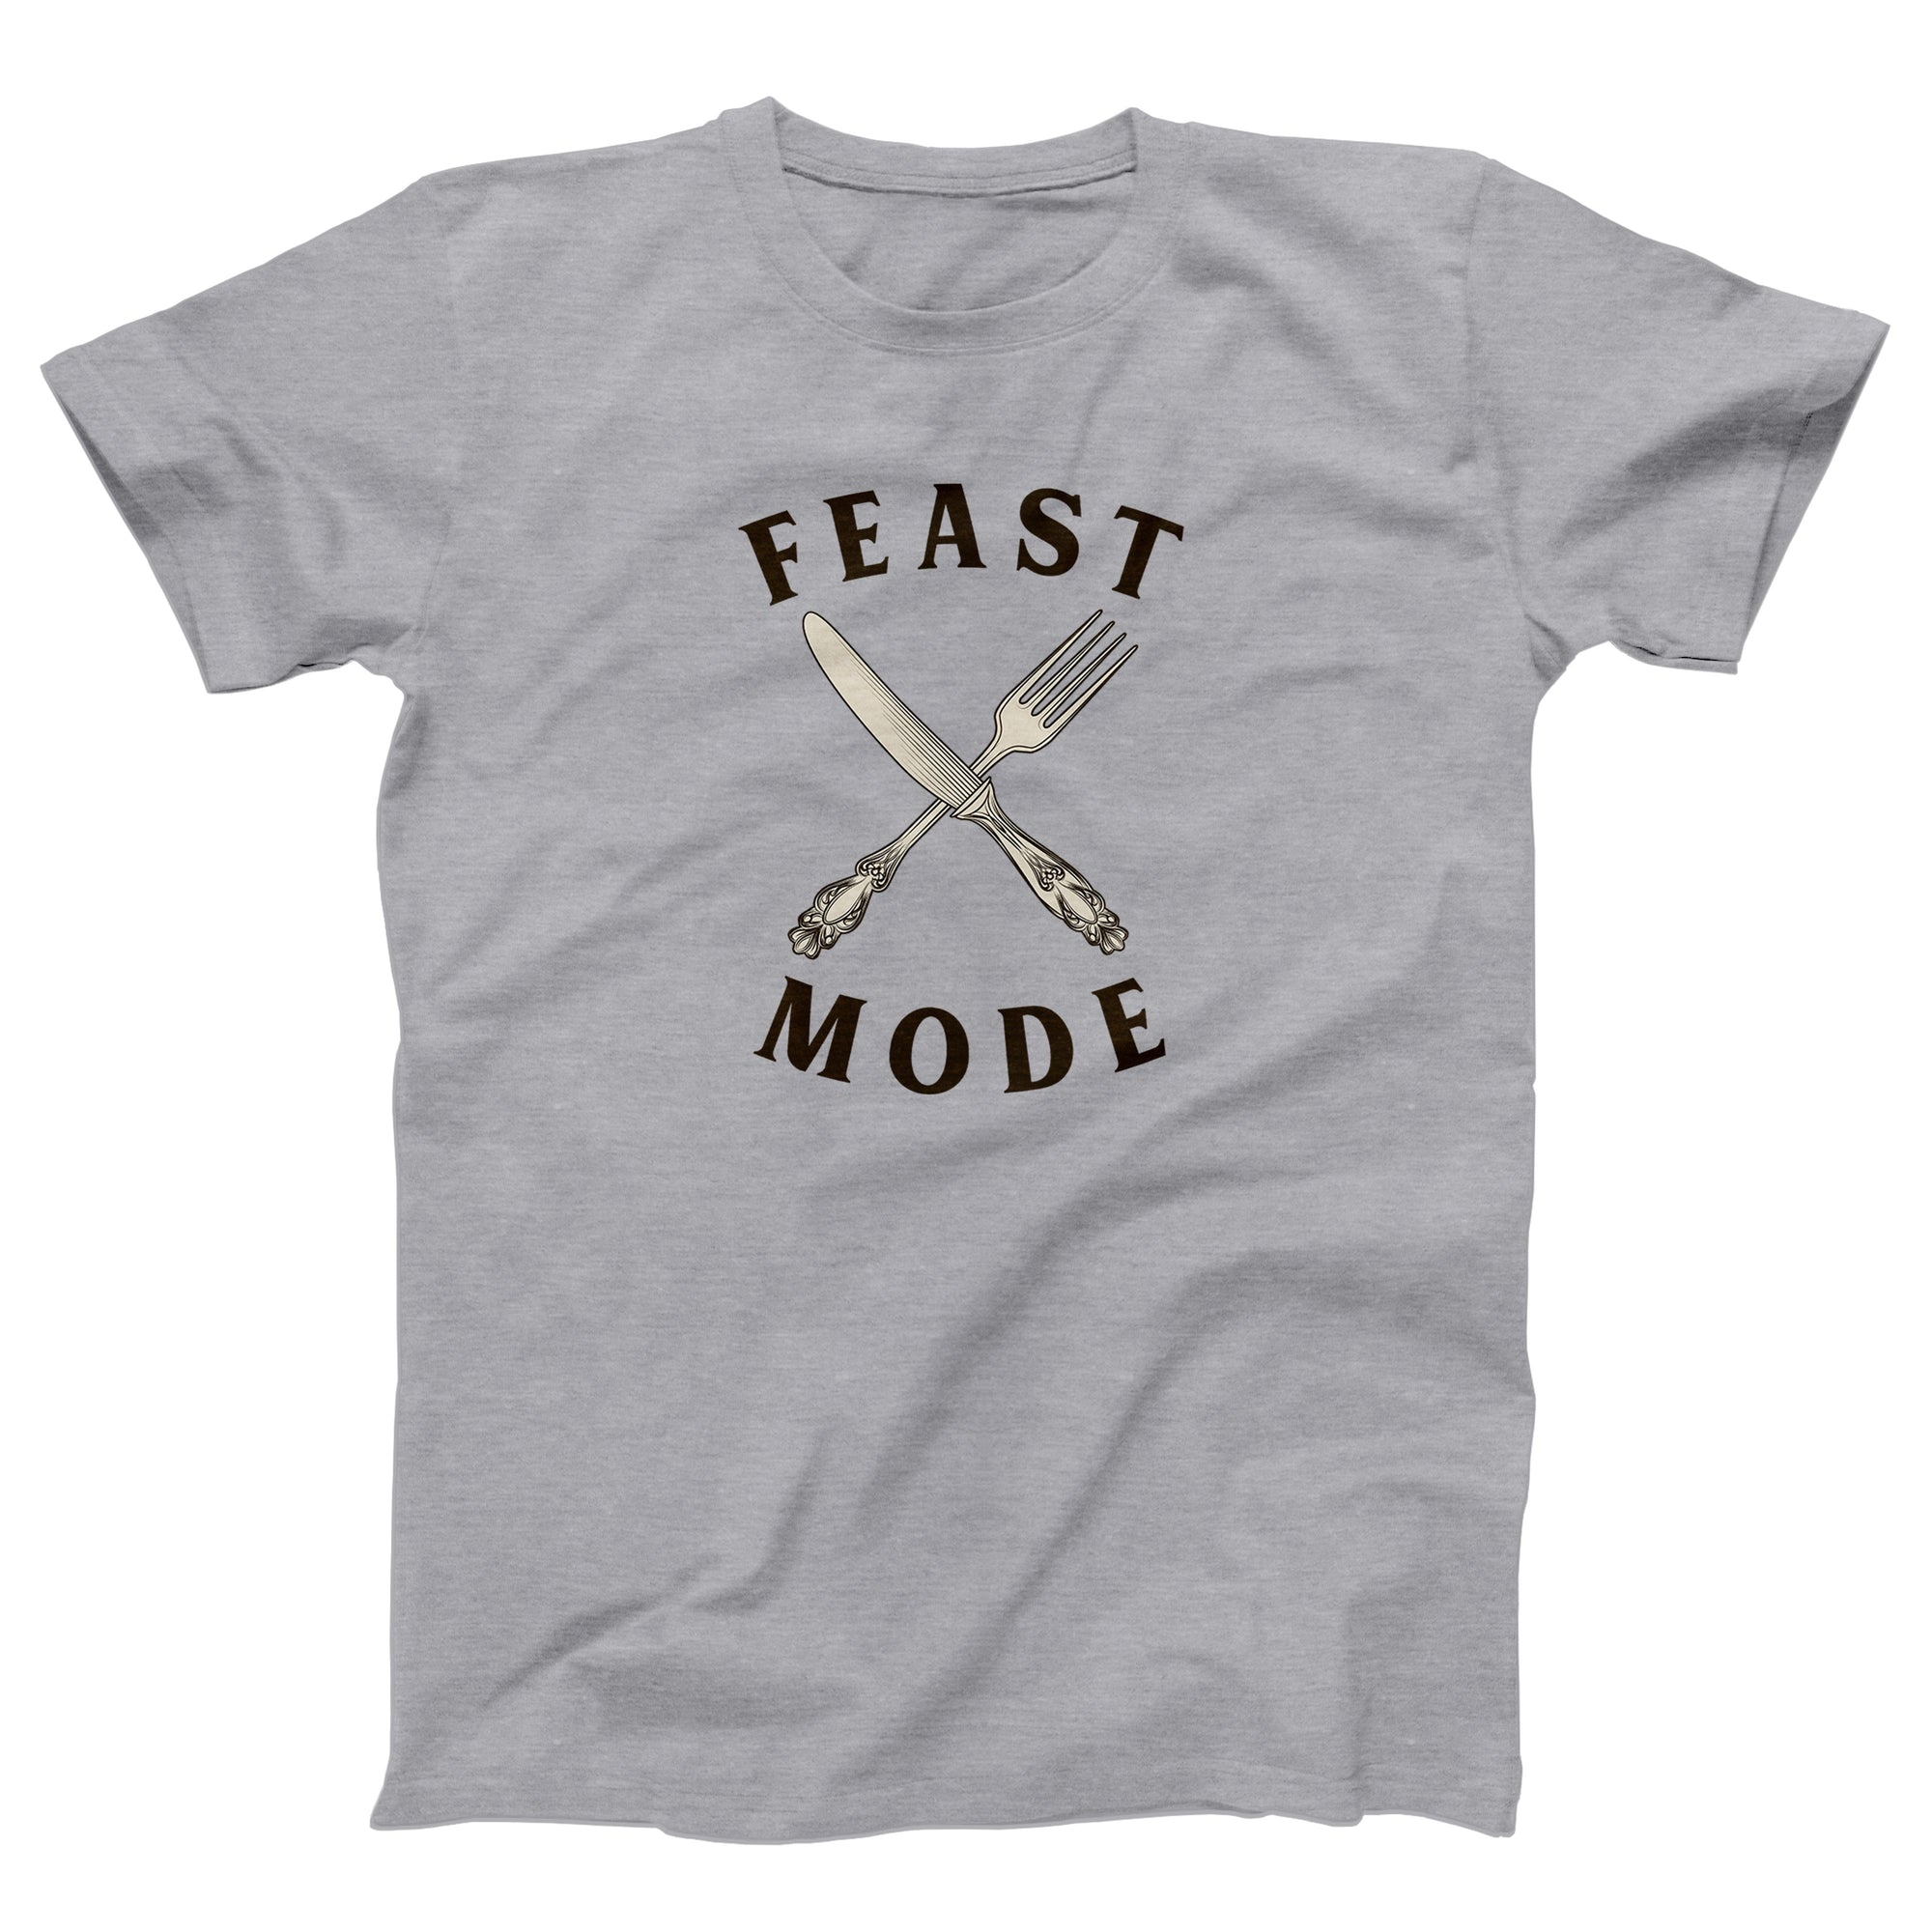 Feast Mode Adult Unisex T-Shirt - anishphilip